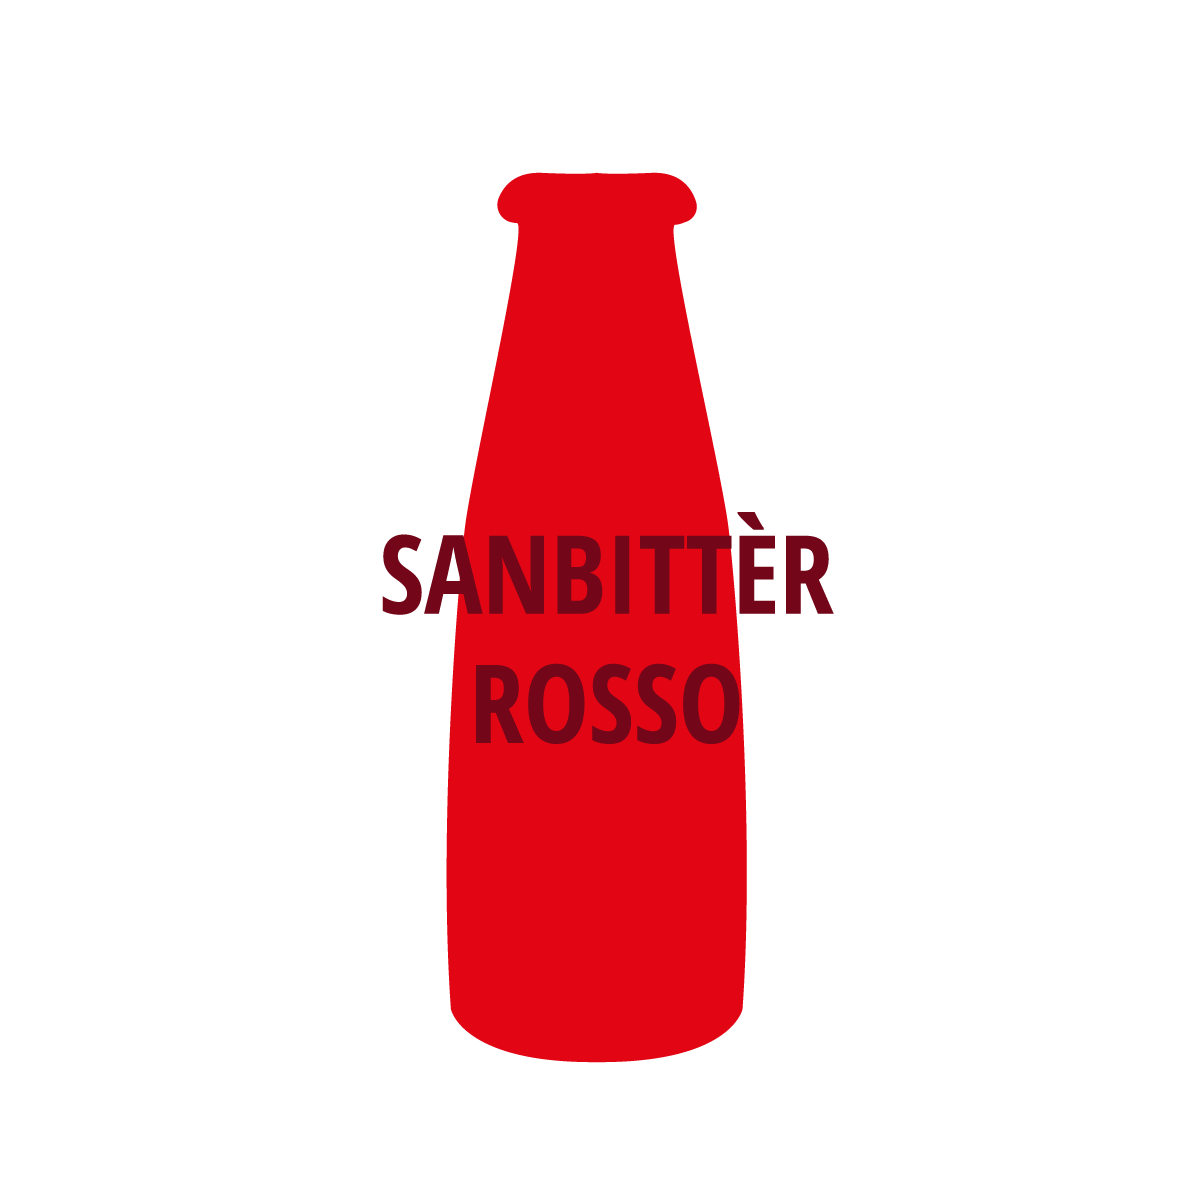 Sanbitter rosso 0